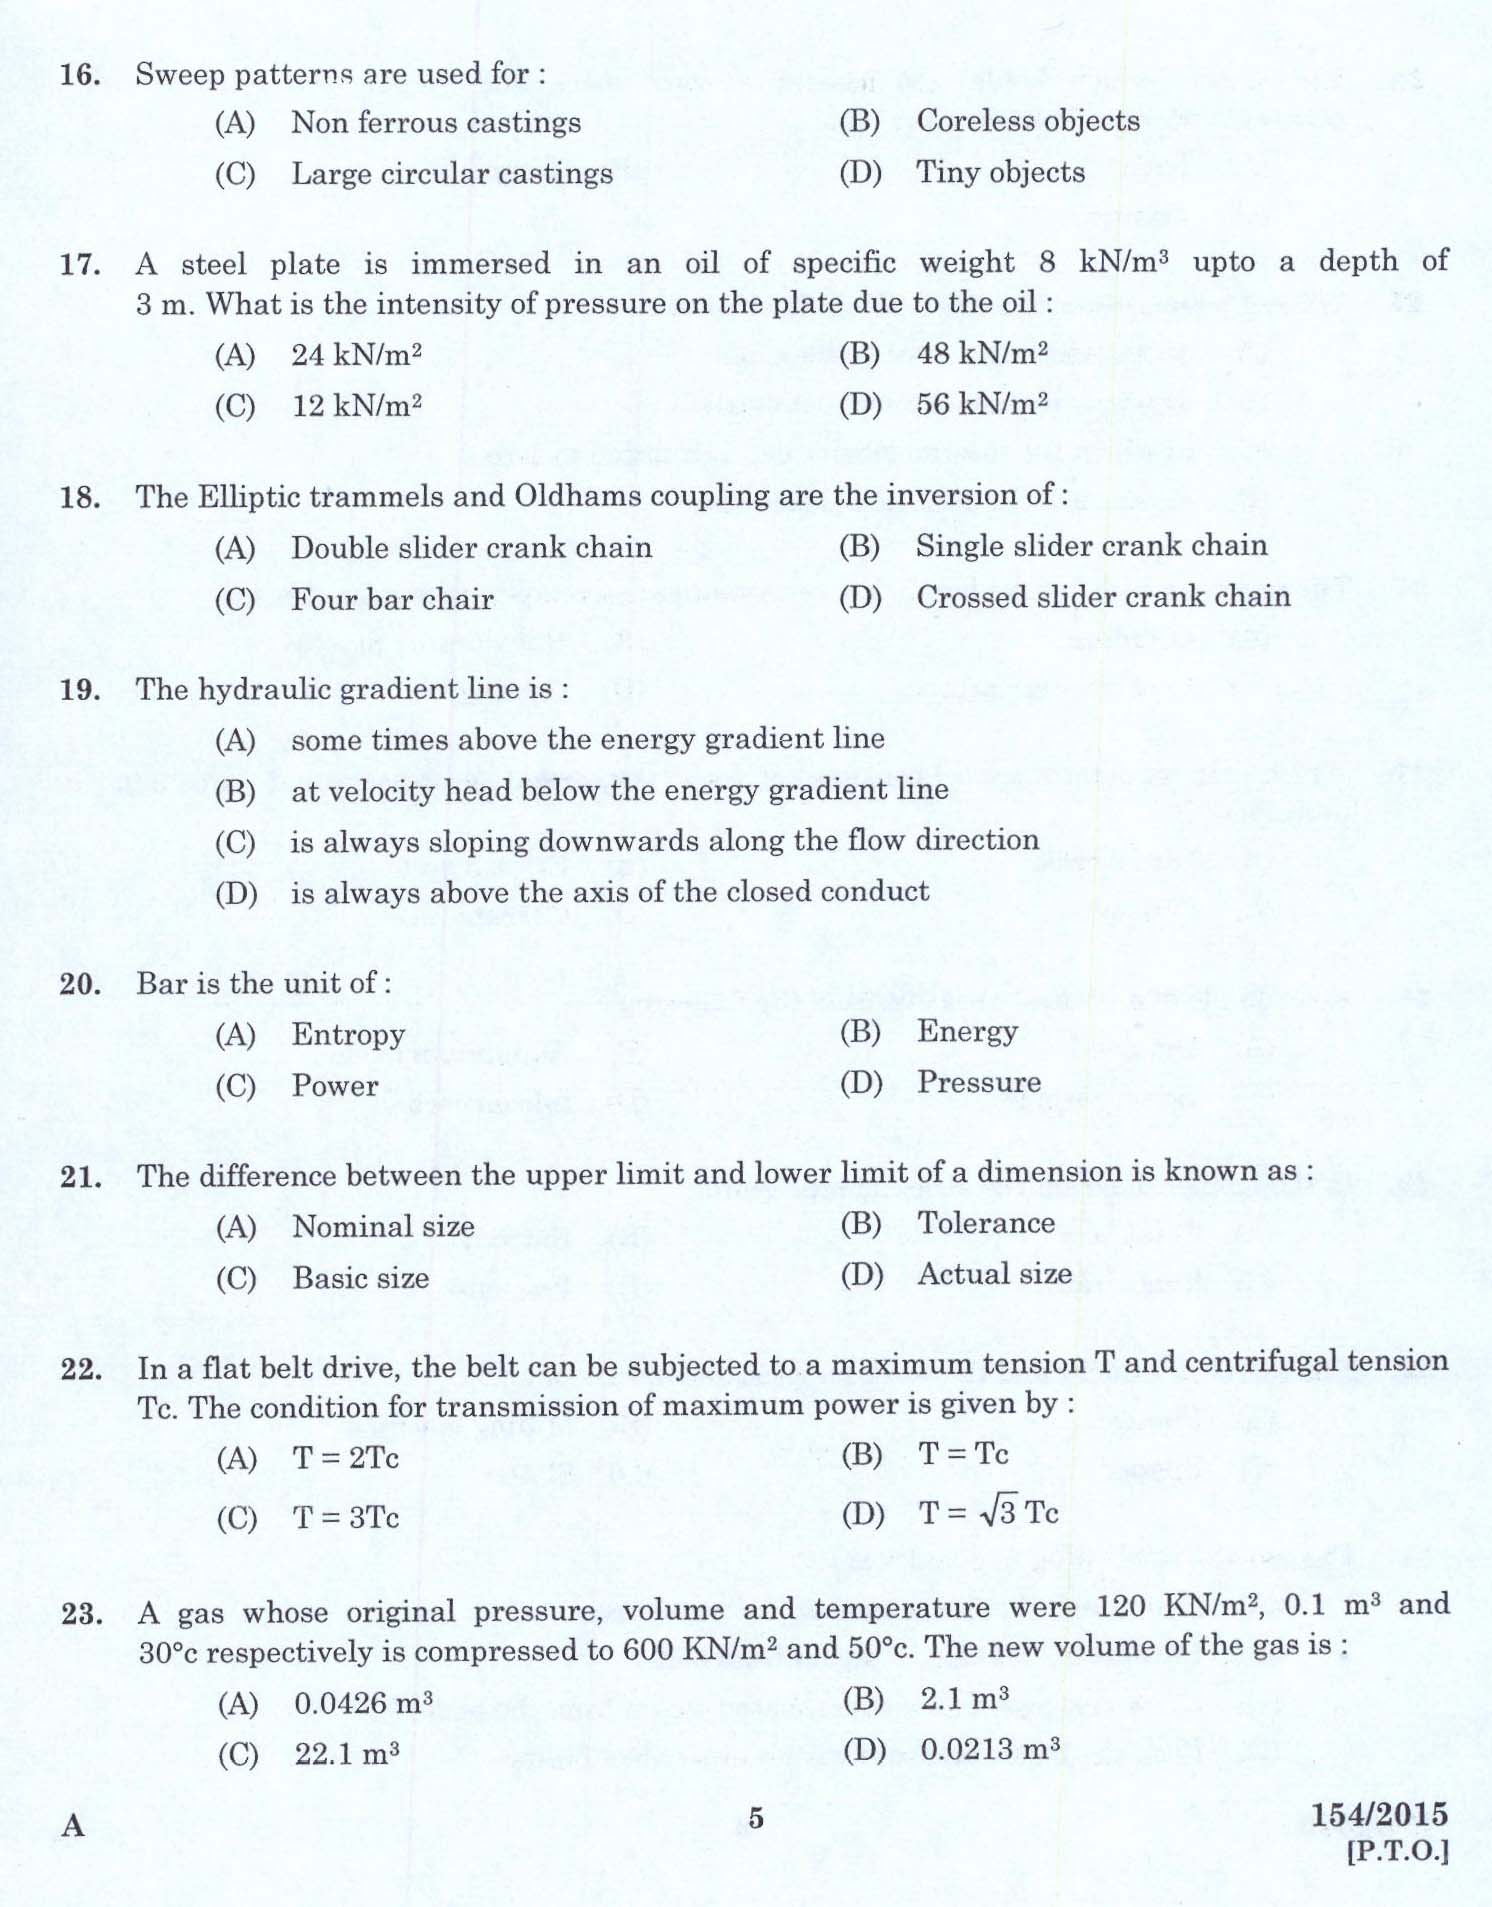 Kerala PSC Foreman Exam 2015 Question Paper Code 1542015 3